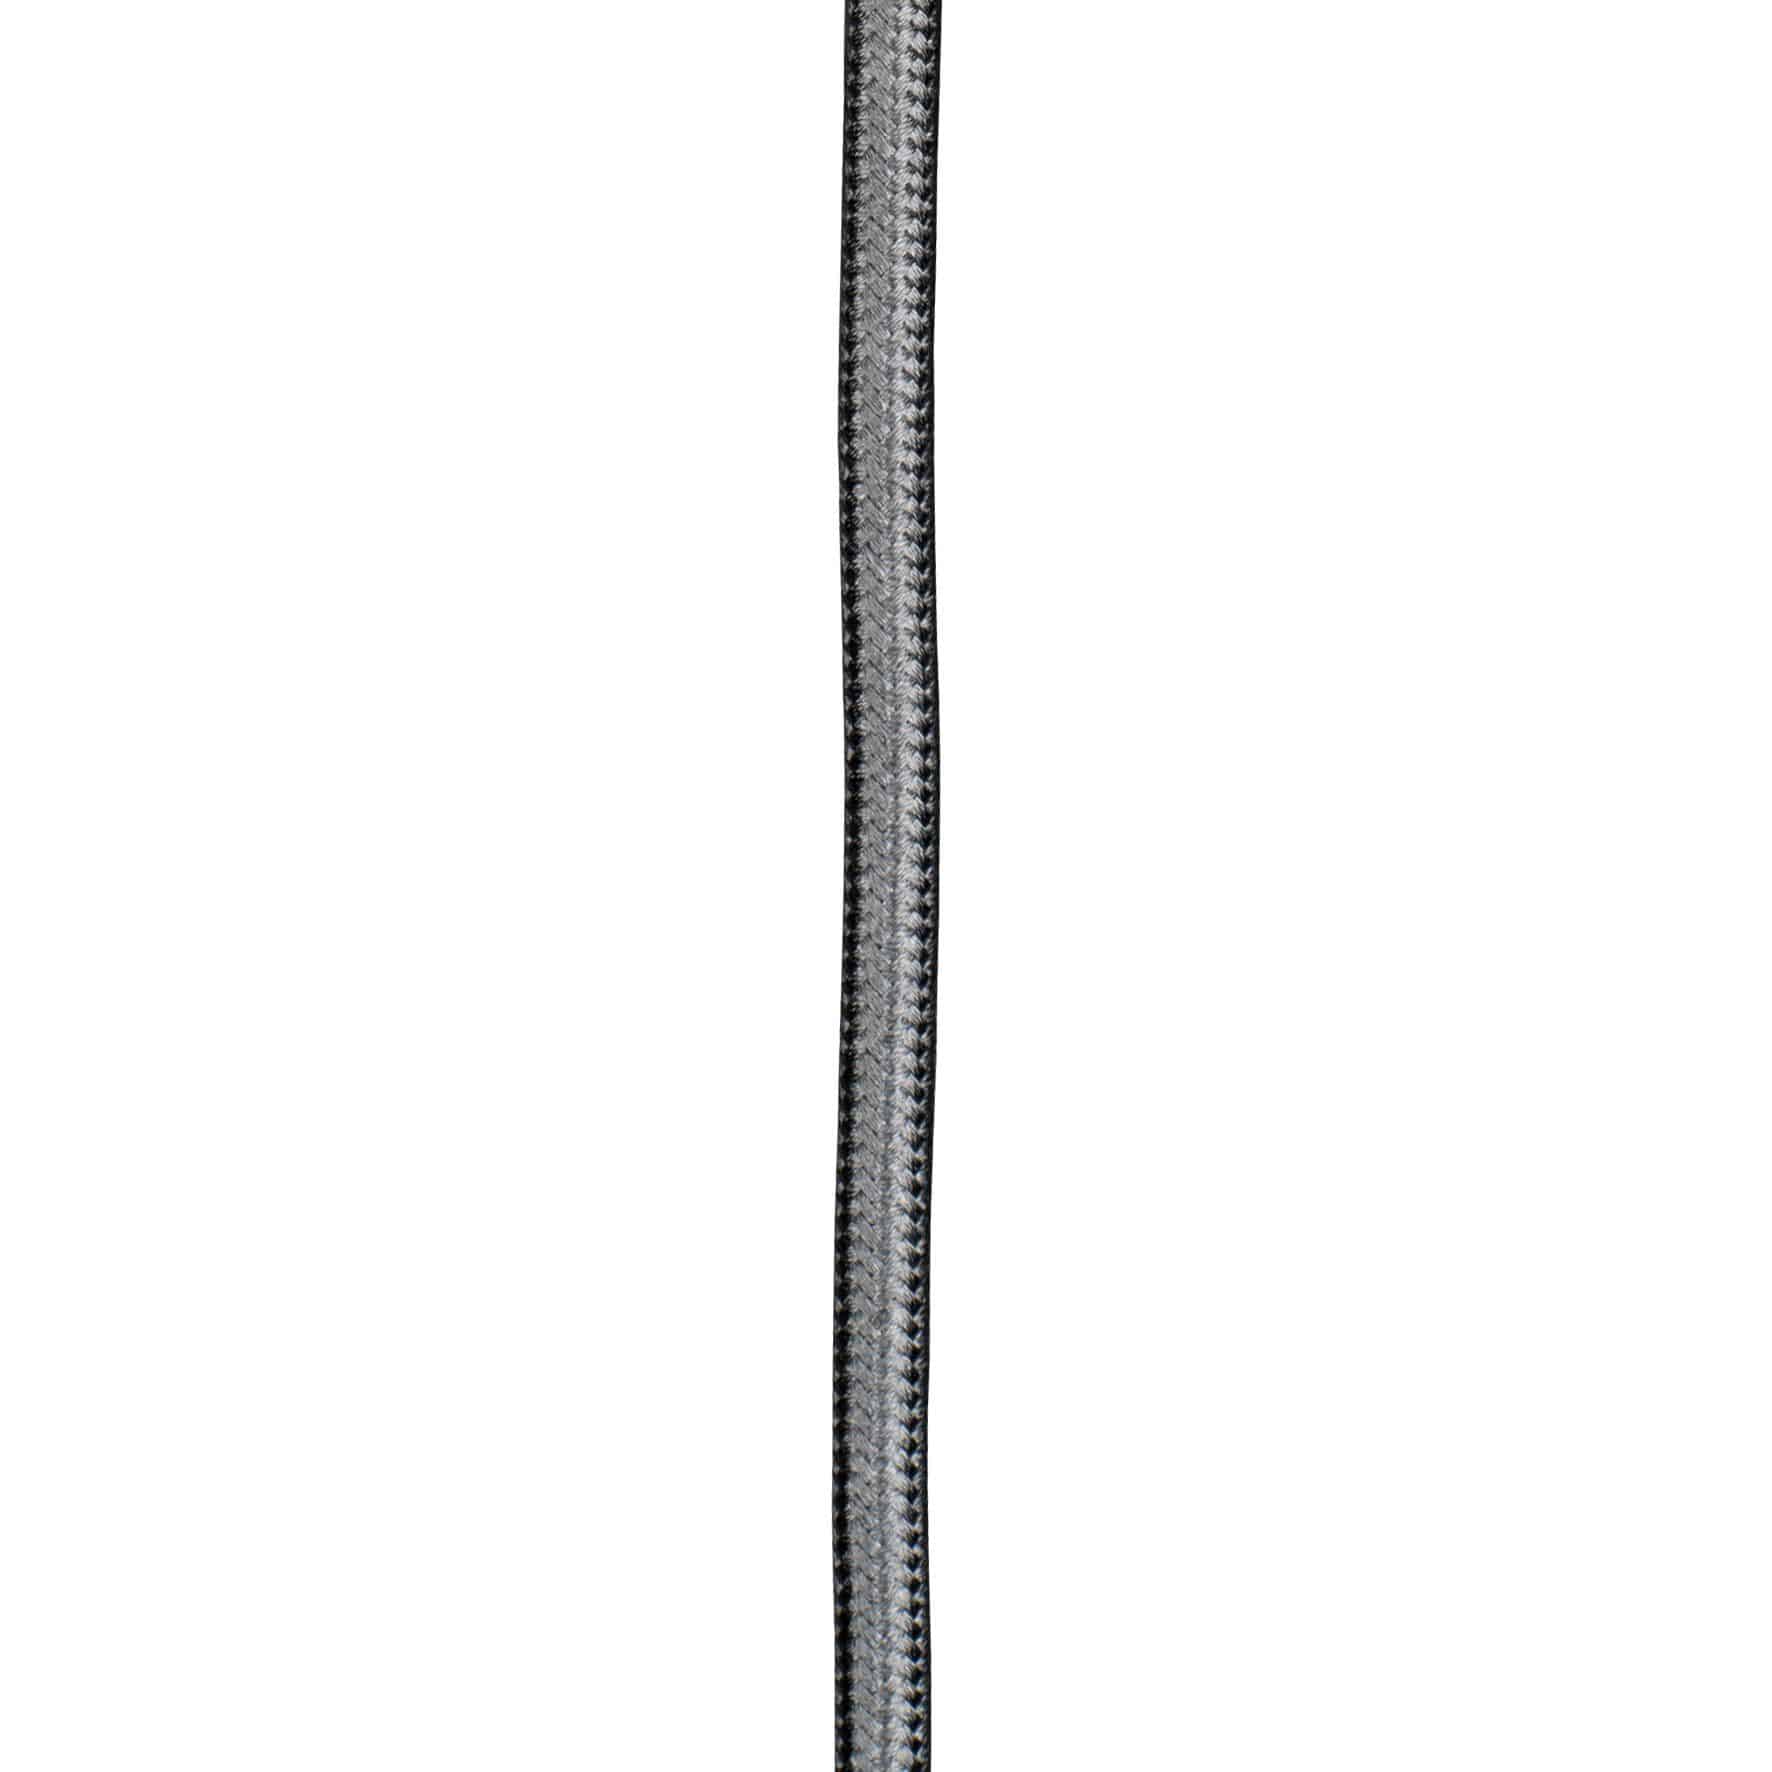 BAILEY 140312 Textilkabel 2x0,75mm², Länge 3m, silber metallic